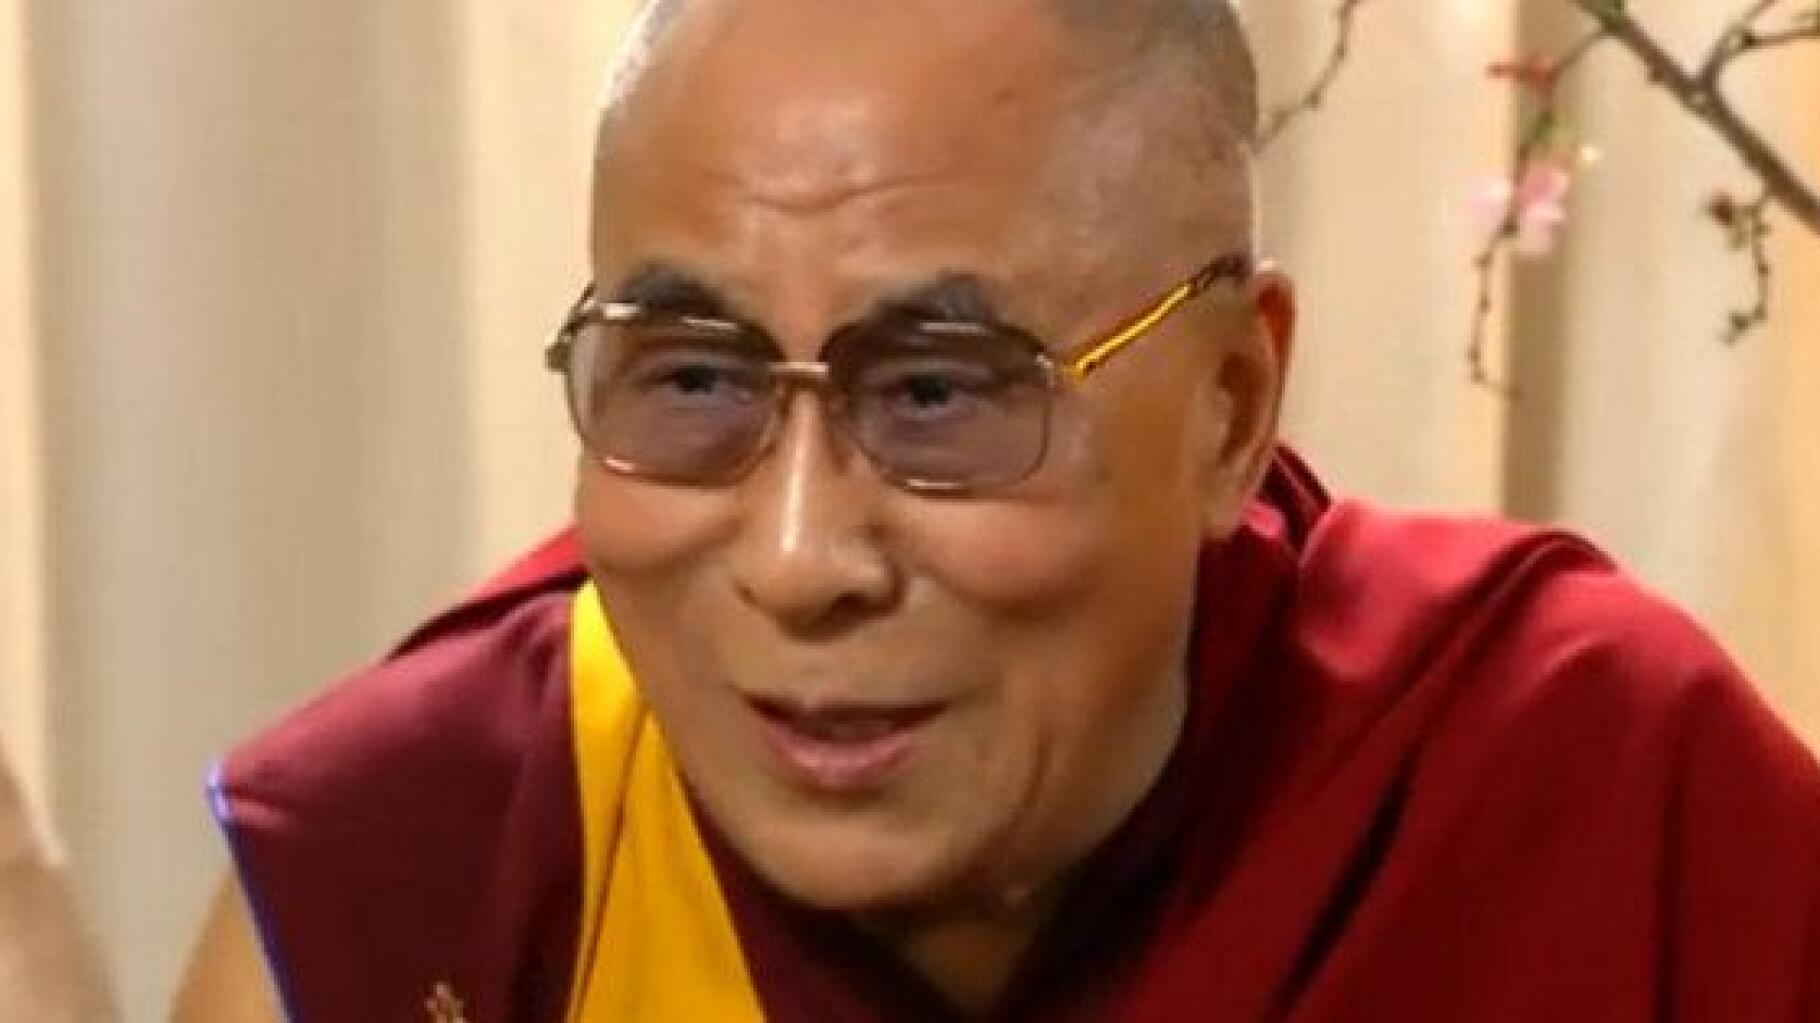 Le Mariage Gay Le Dalai Lama N A Rien Contre